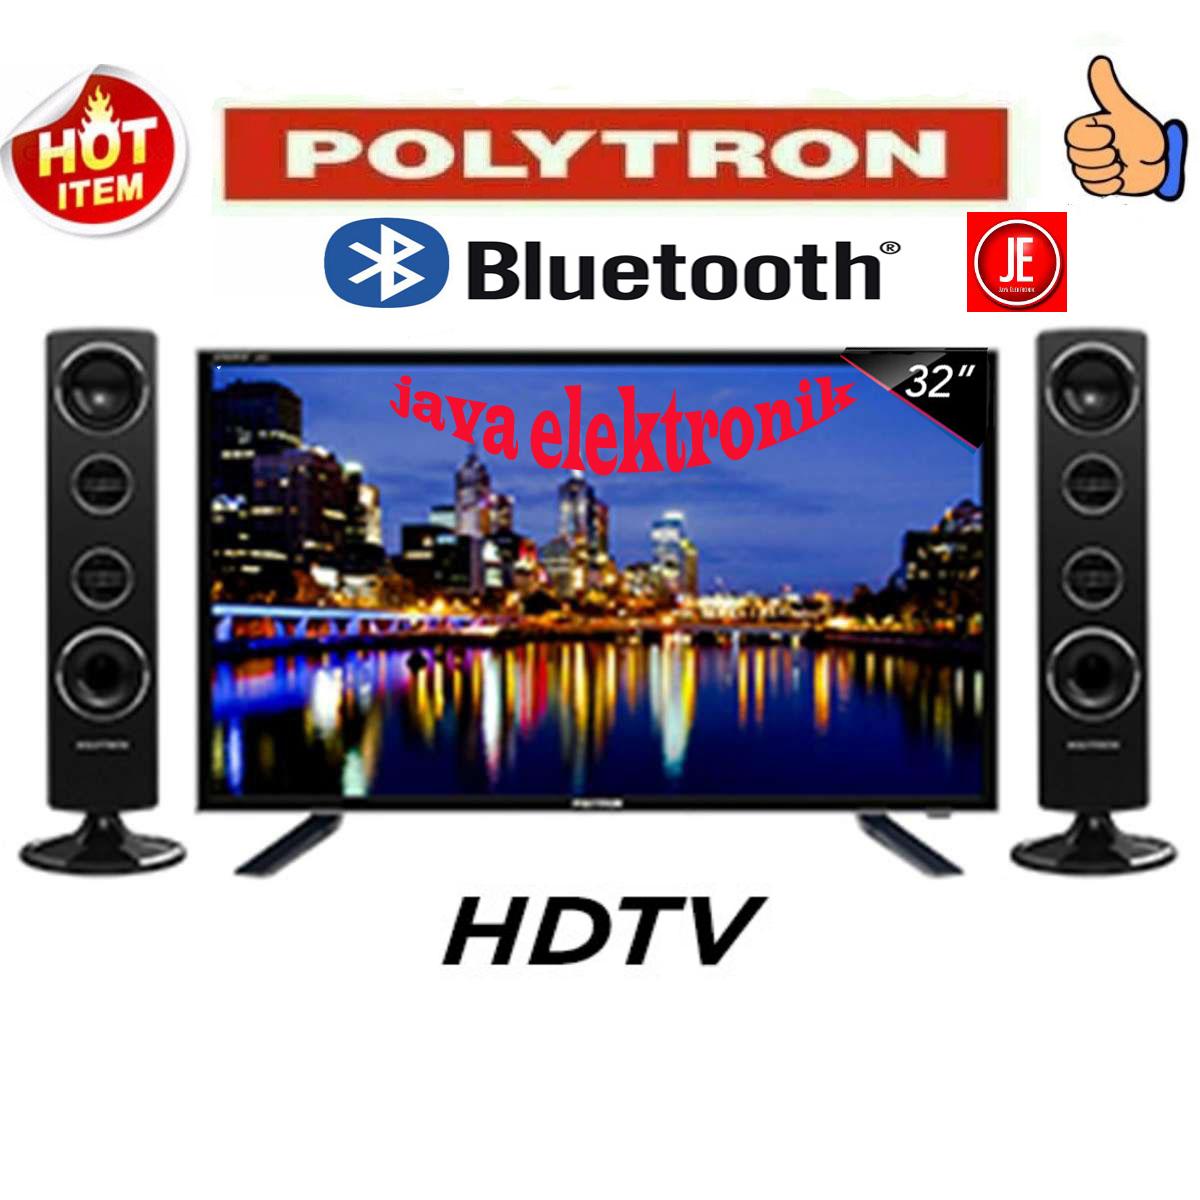 Polytron TV LED 32 INCH PLD 32T1506 +sepeker tower+bluetooth garansi resmi